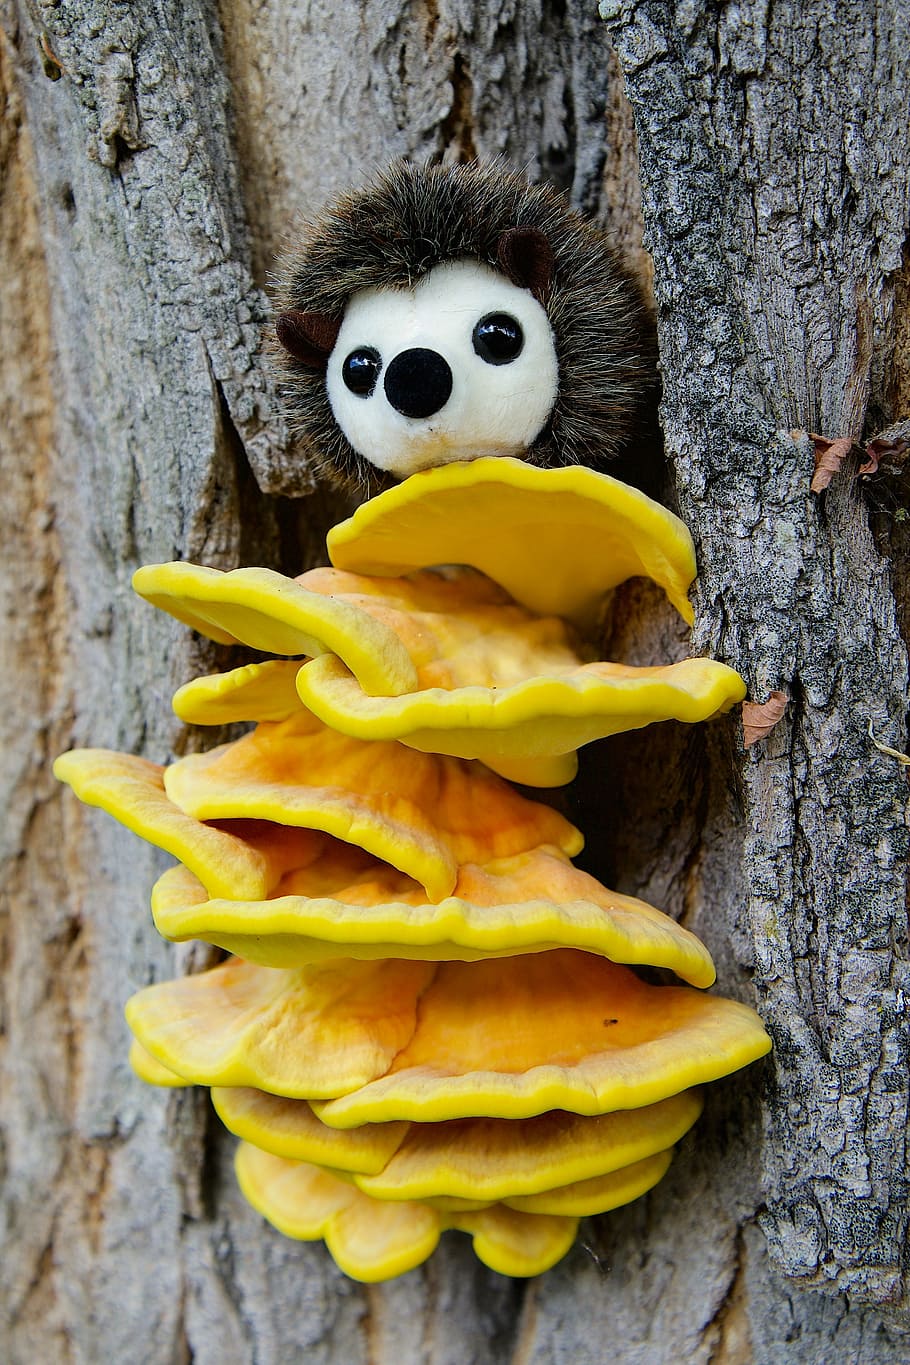 yellow mushrooms, nature, tree, tree bark, mushroom, sulphur ovinus, hedgehog, tree trunk, yellow, close-up